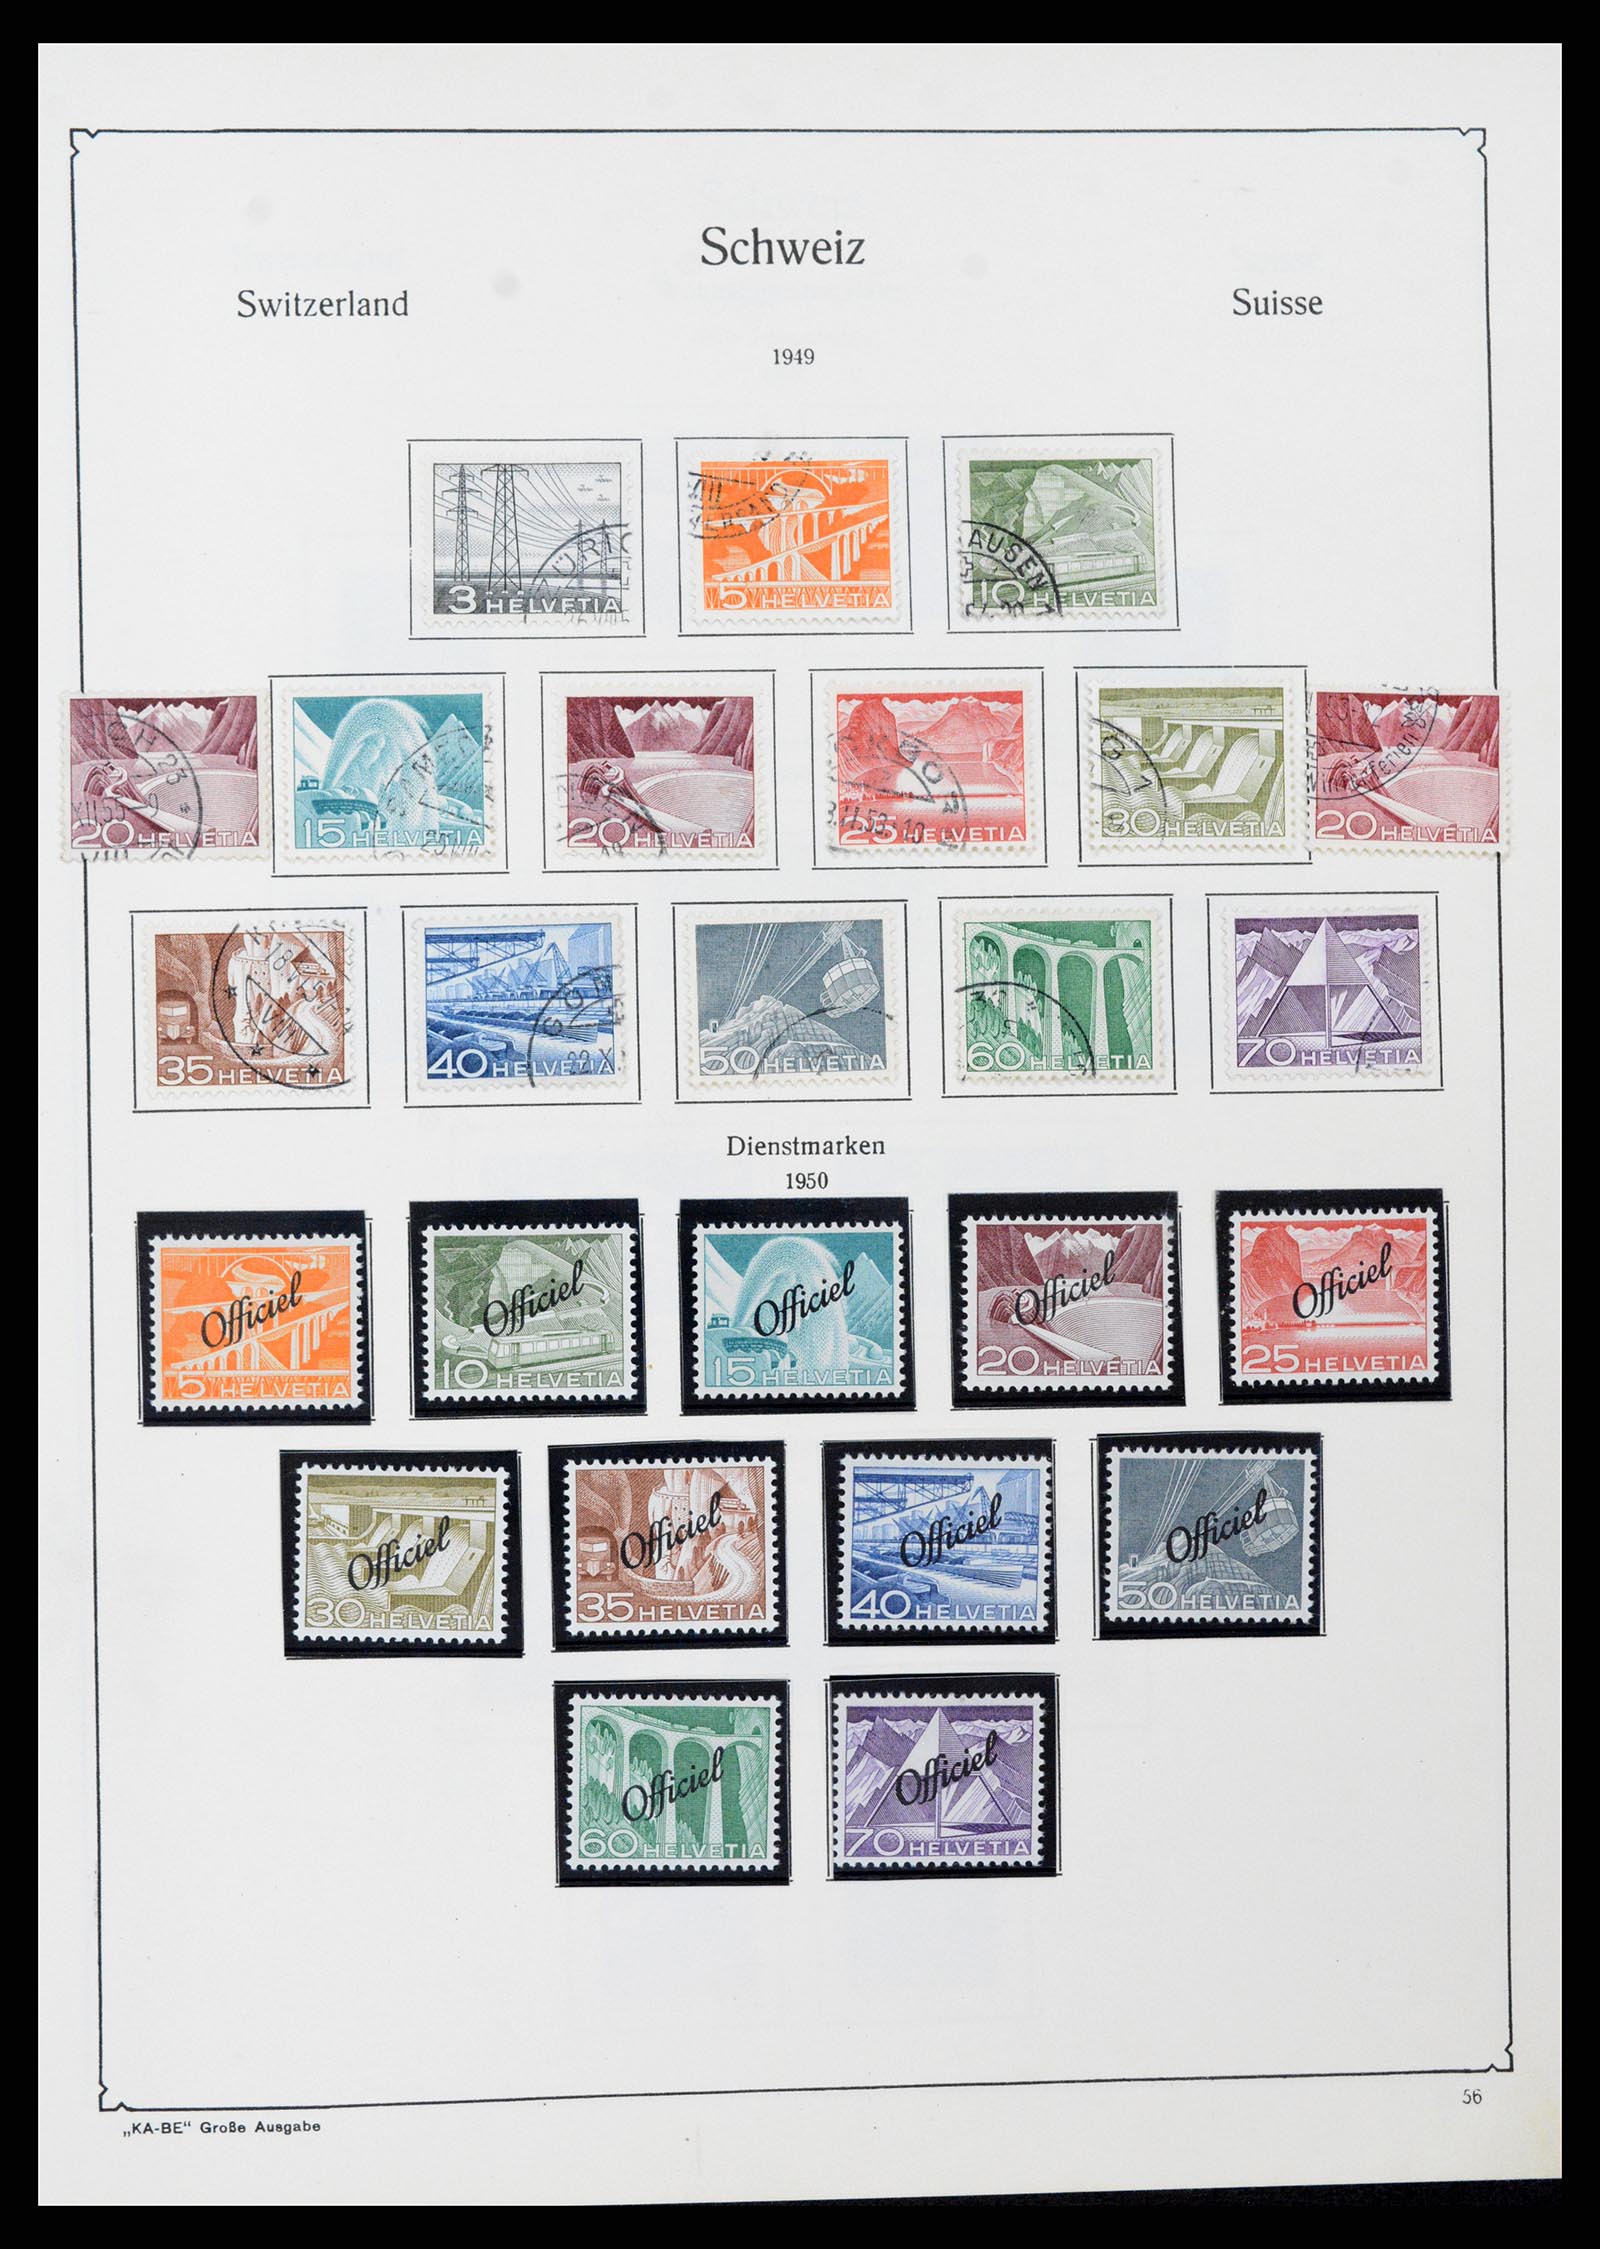 37588 053 - Stamp collection 37588 Switzerland 1854-1974.